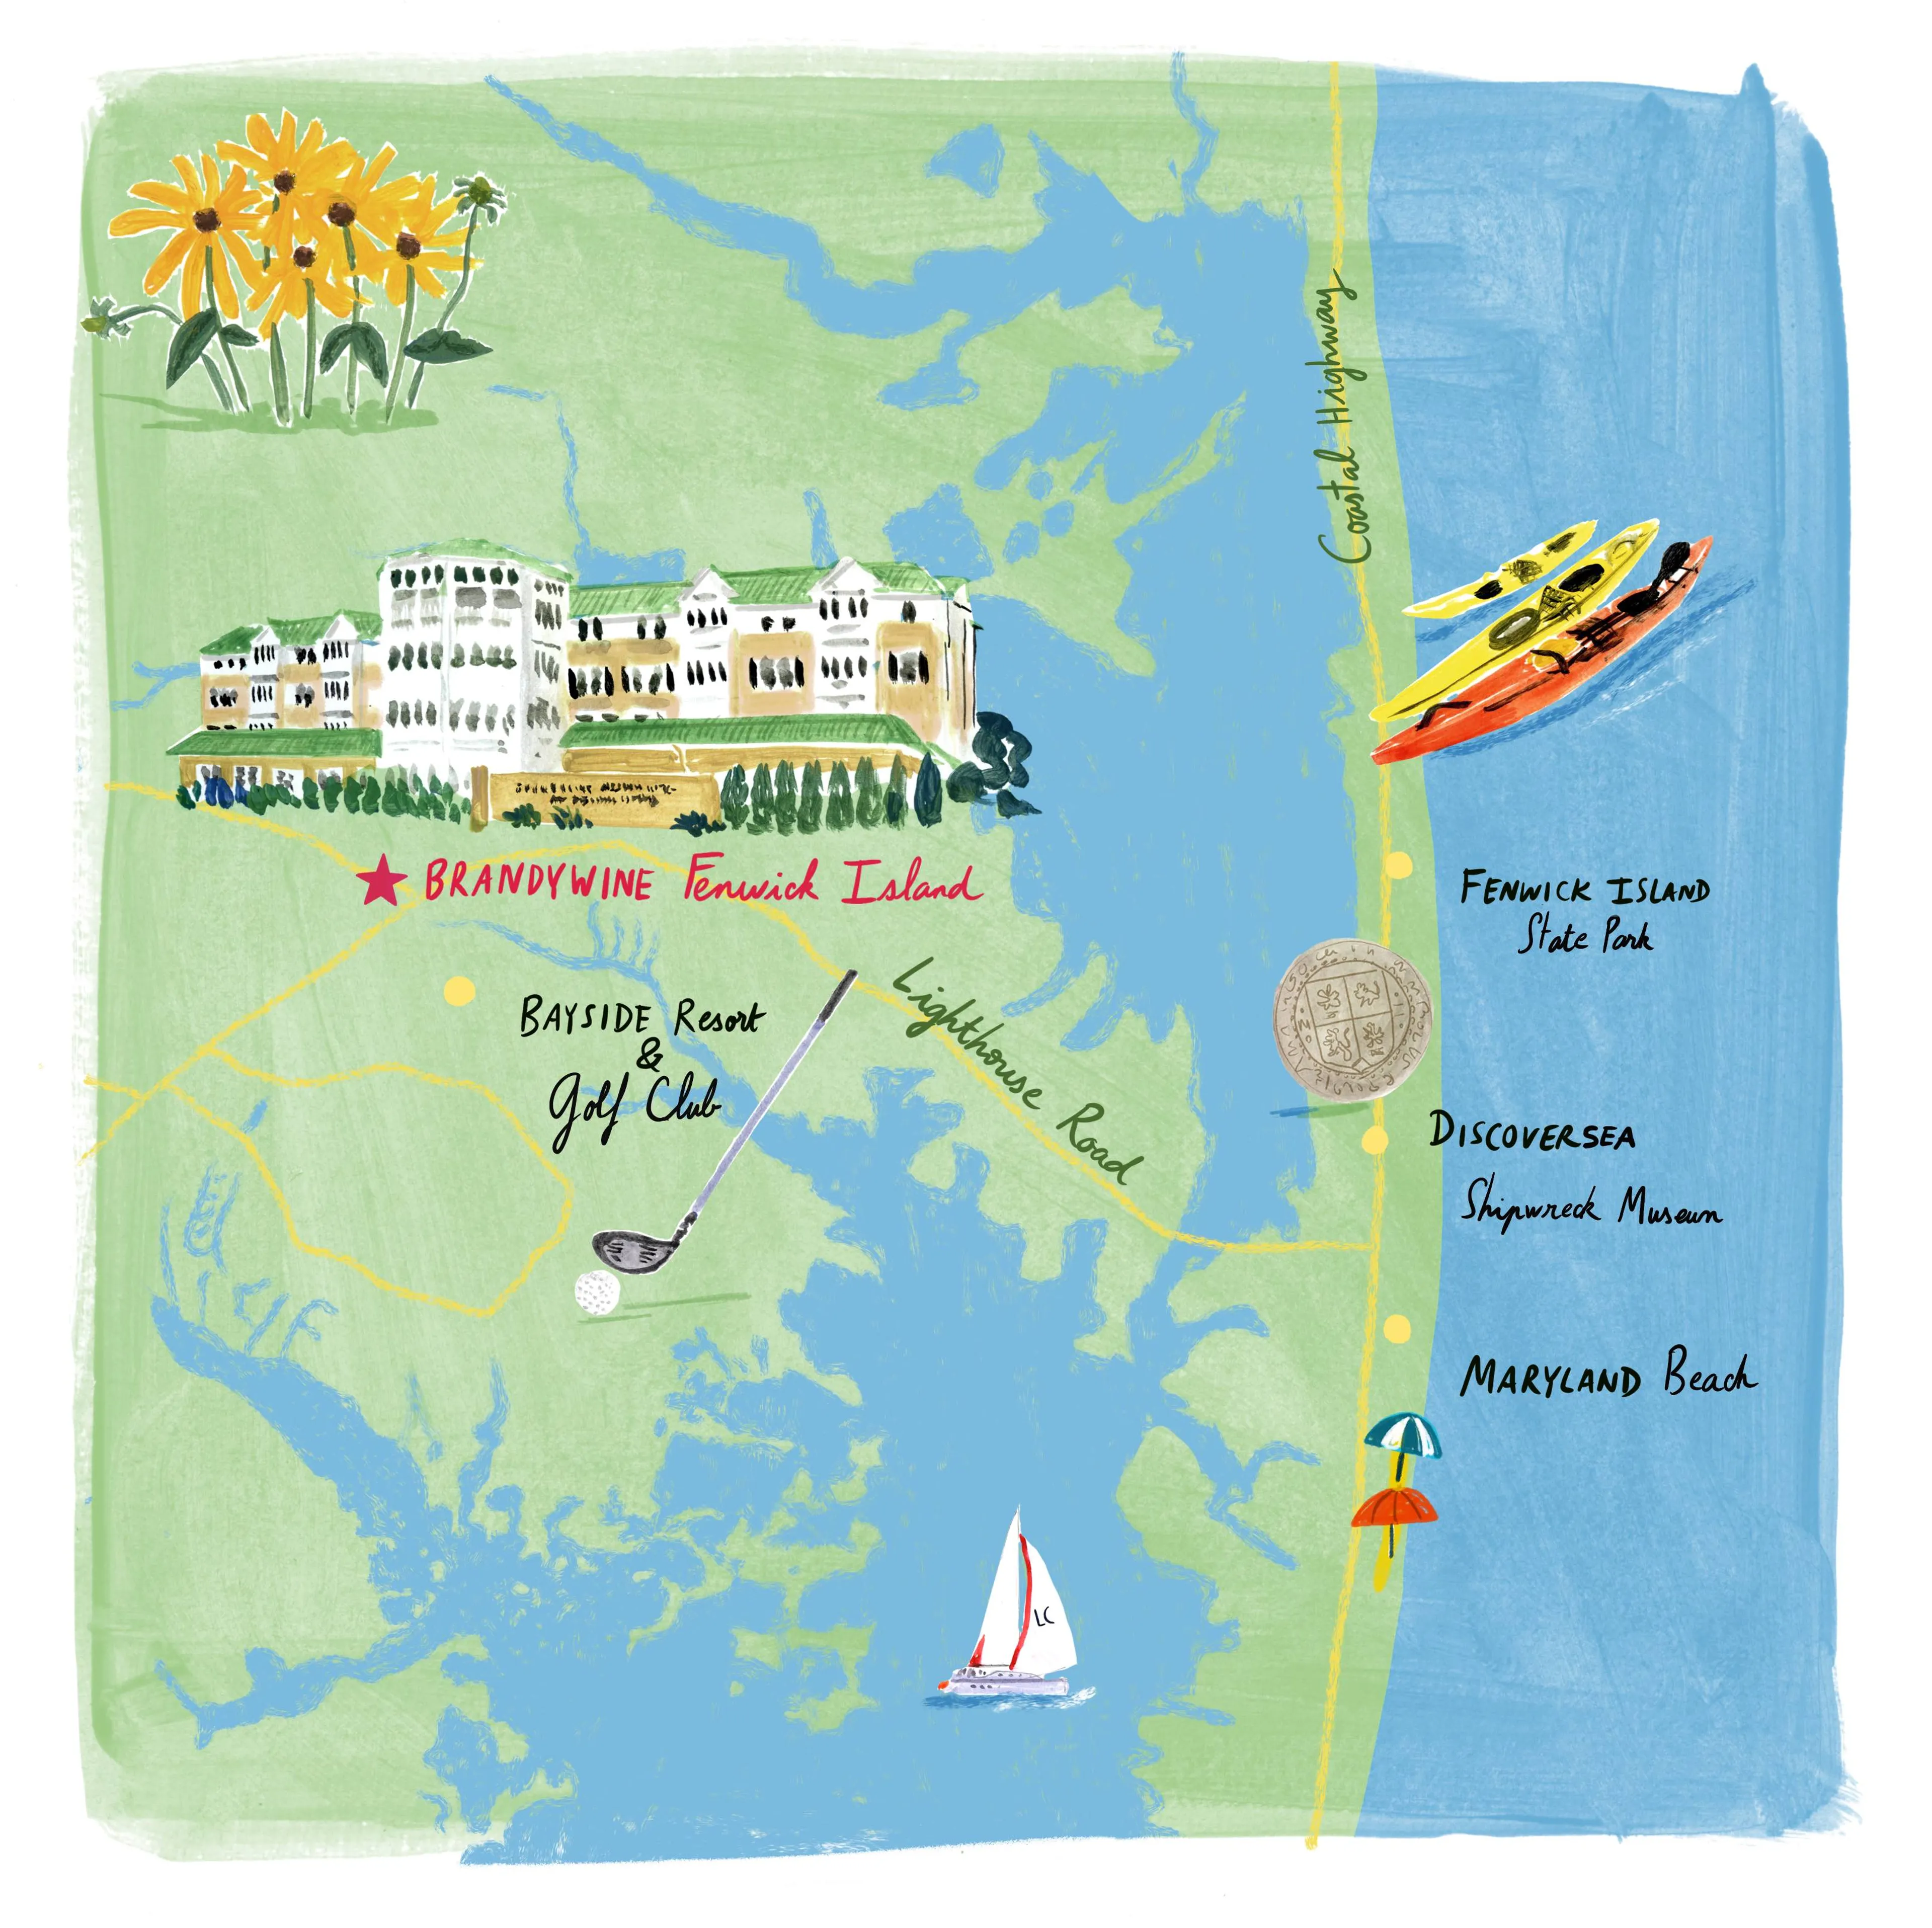 Hand-illustrated map of  major roads, landmarks and beaches surrounding Brandywine in Fenwick Island, Delaware